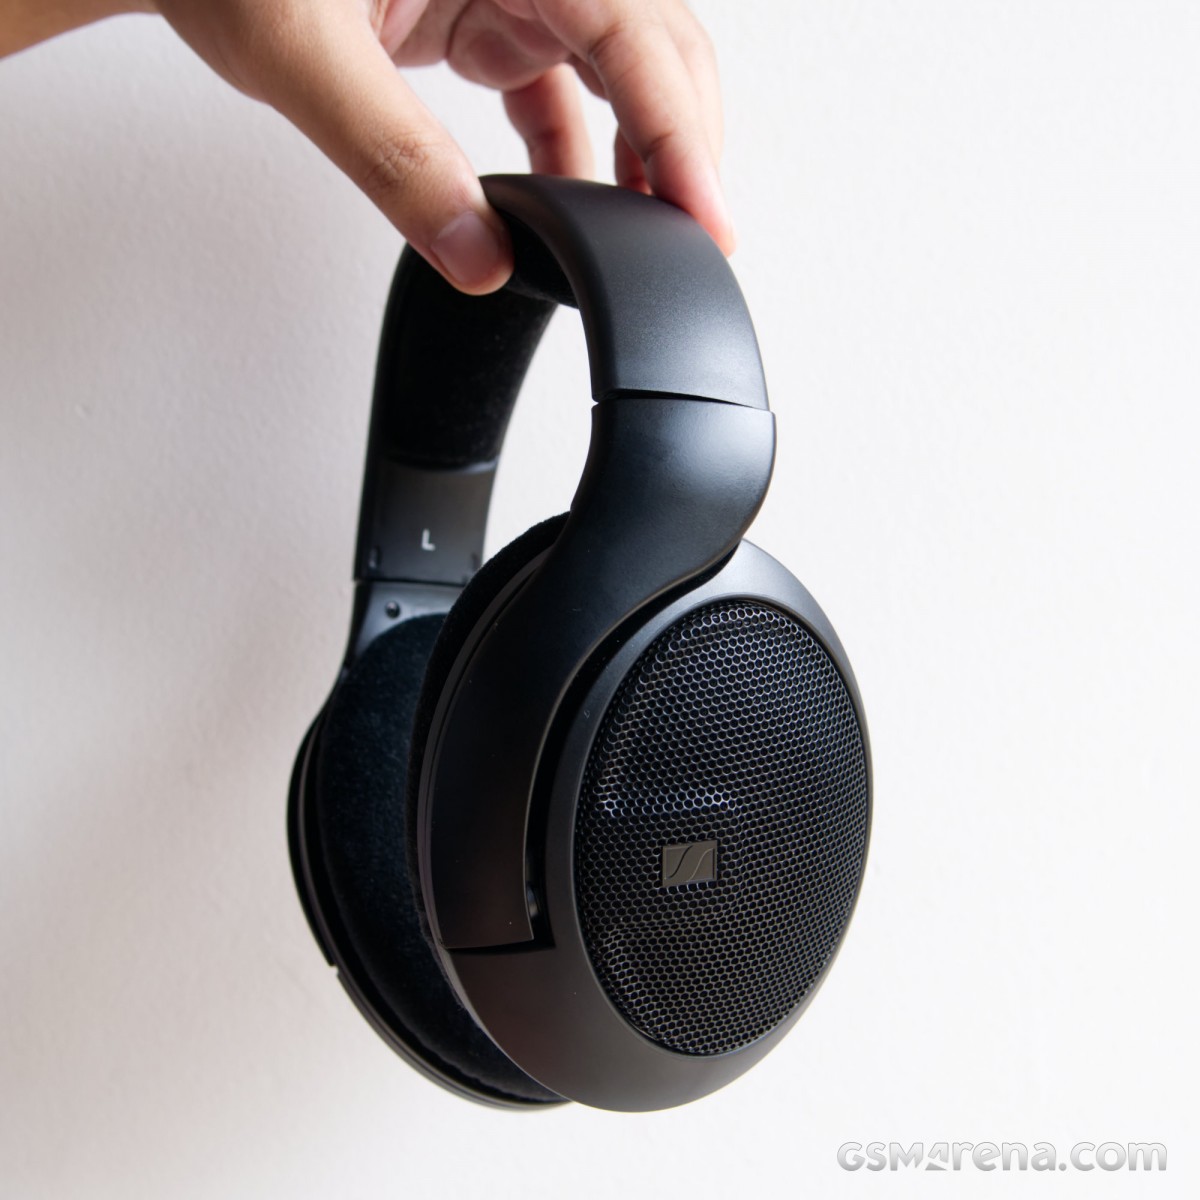 Sennheiser HD 400 Pro professional mastering headphones review